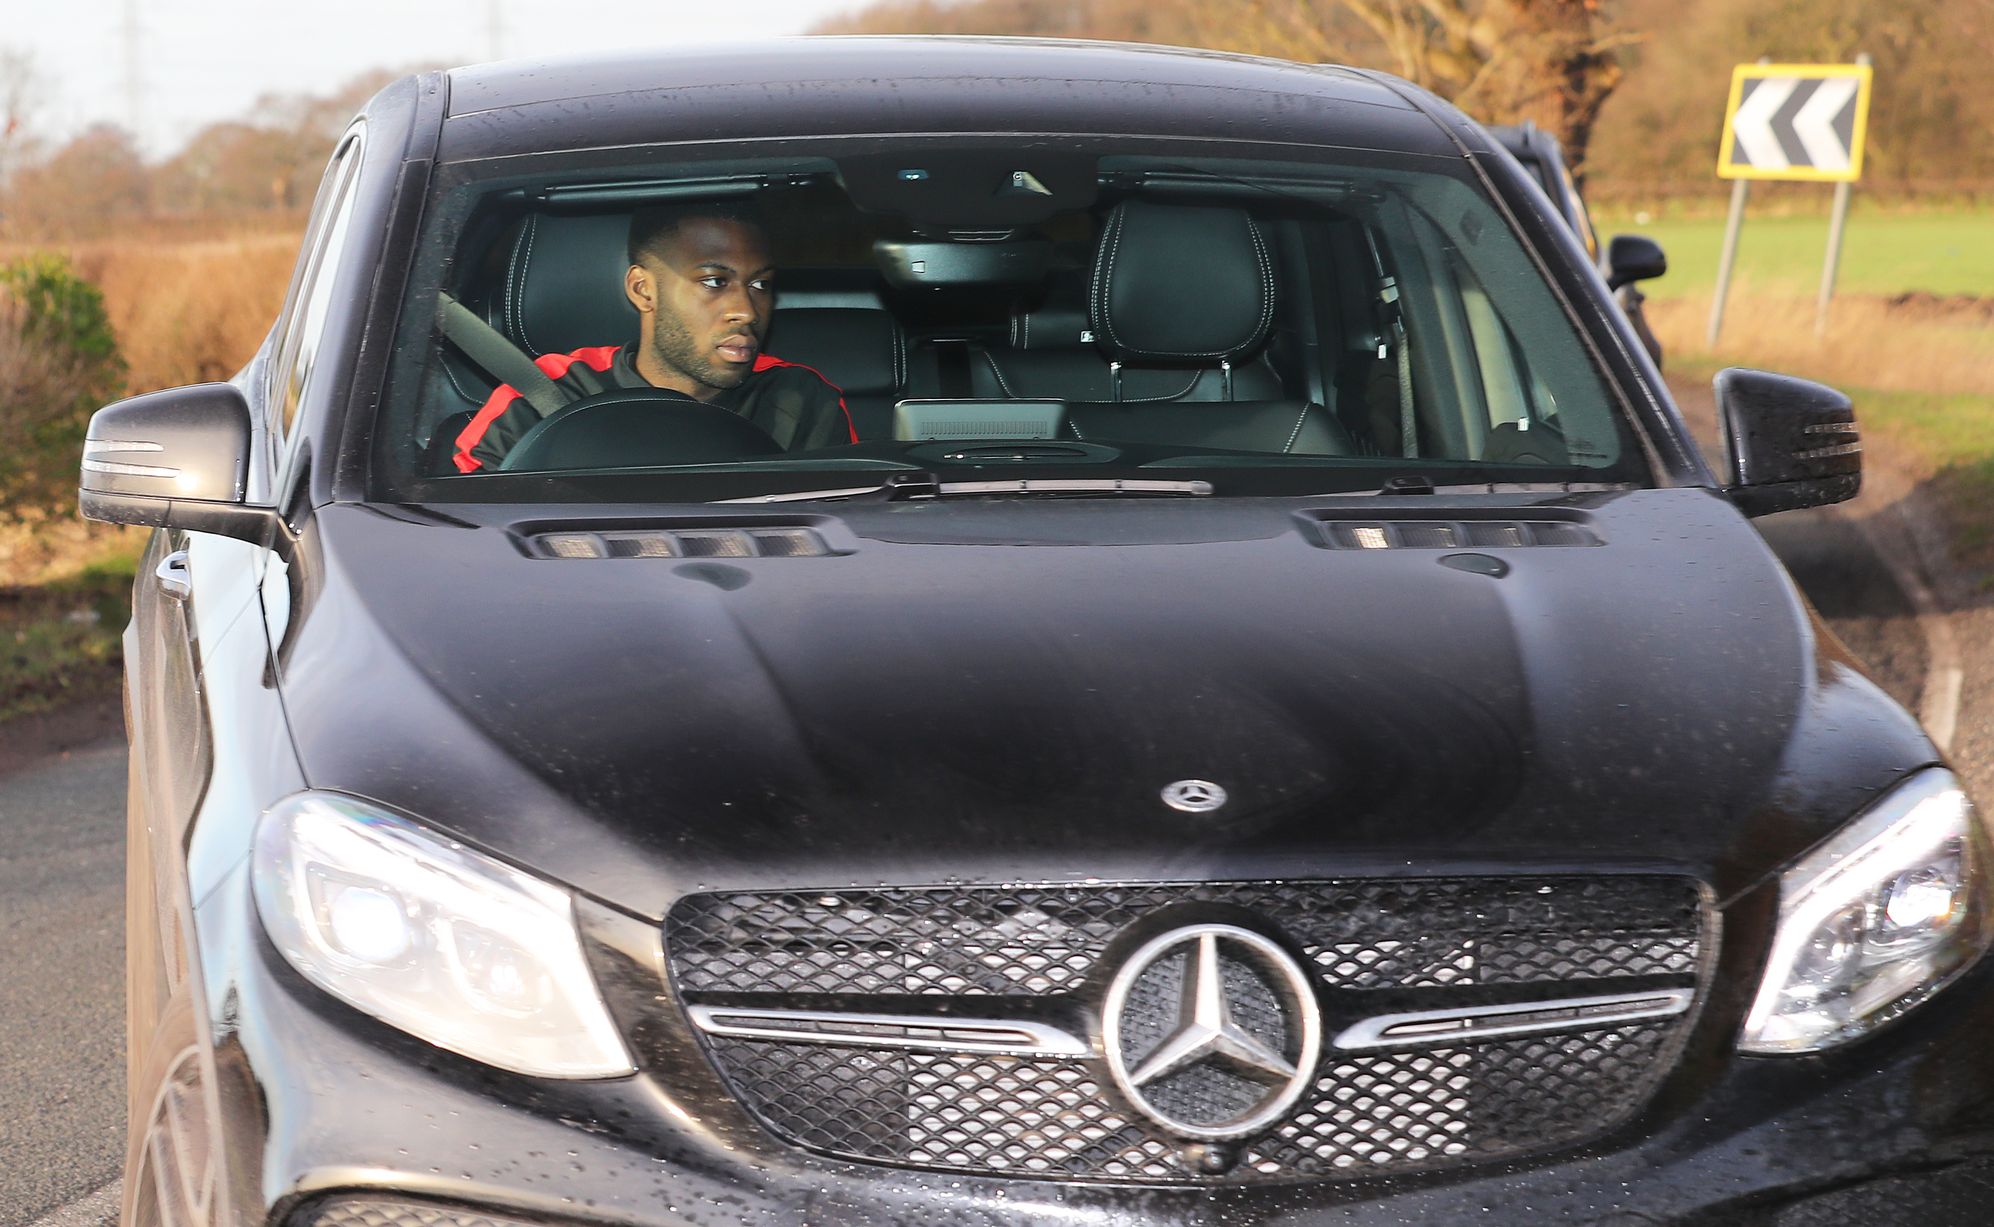 Marcus Rashford arrives at Manchester United training ground after injury blow - Ảnh - Bóng Đá